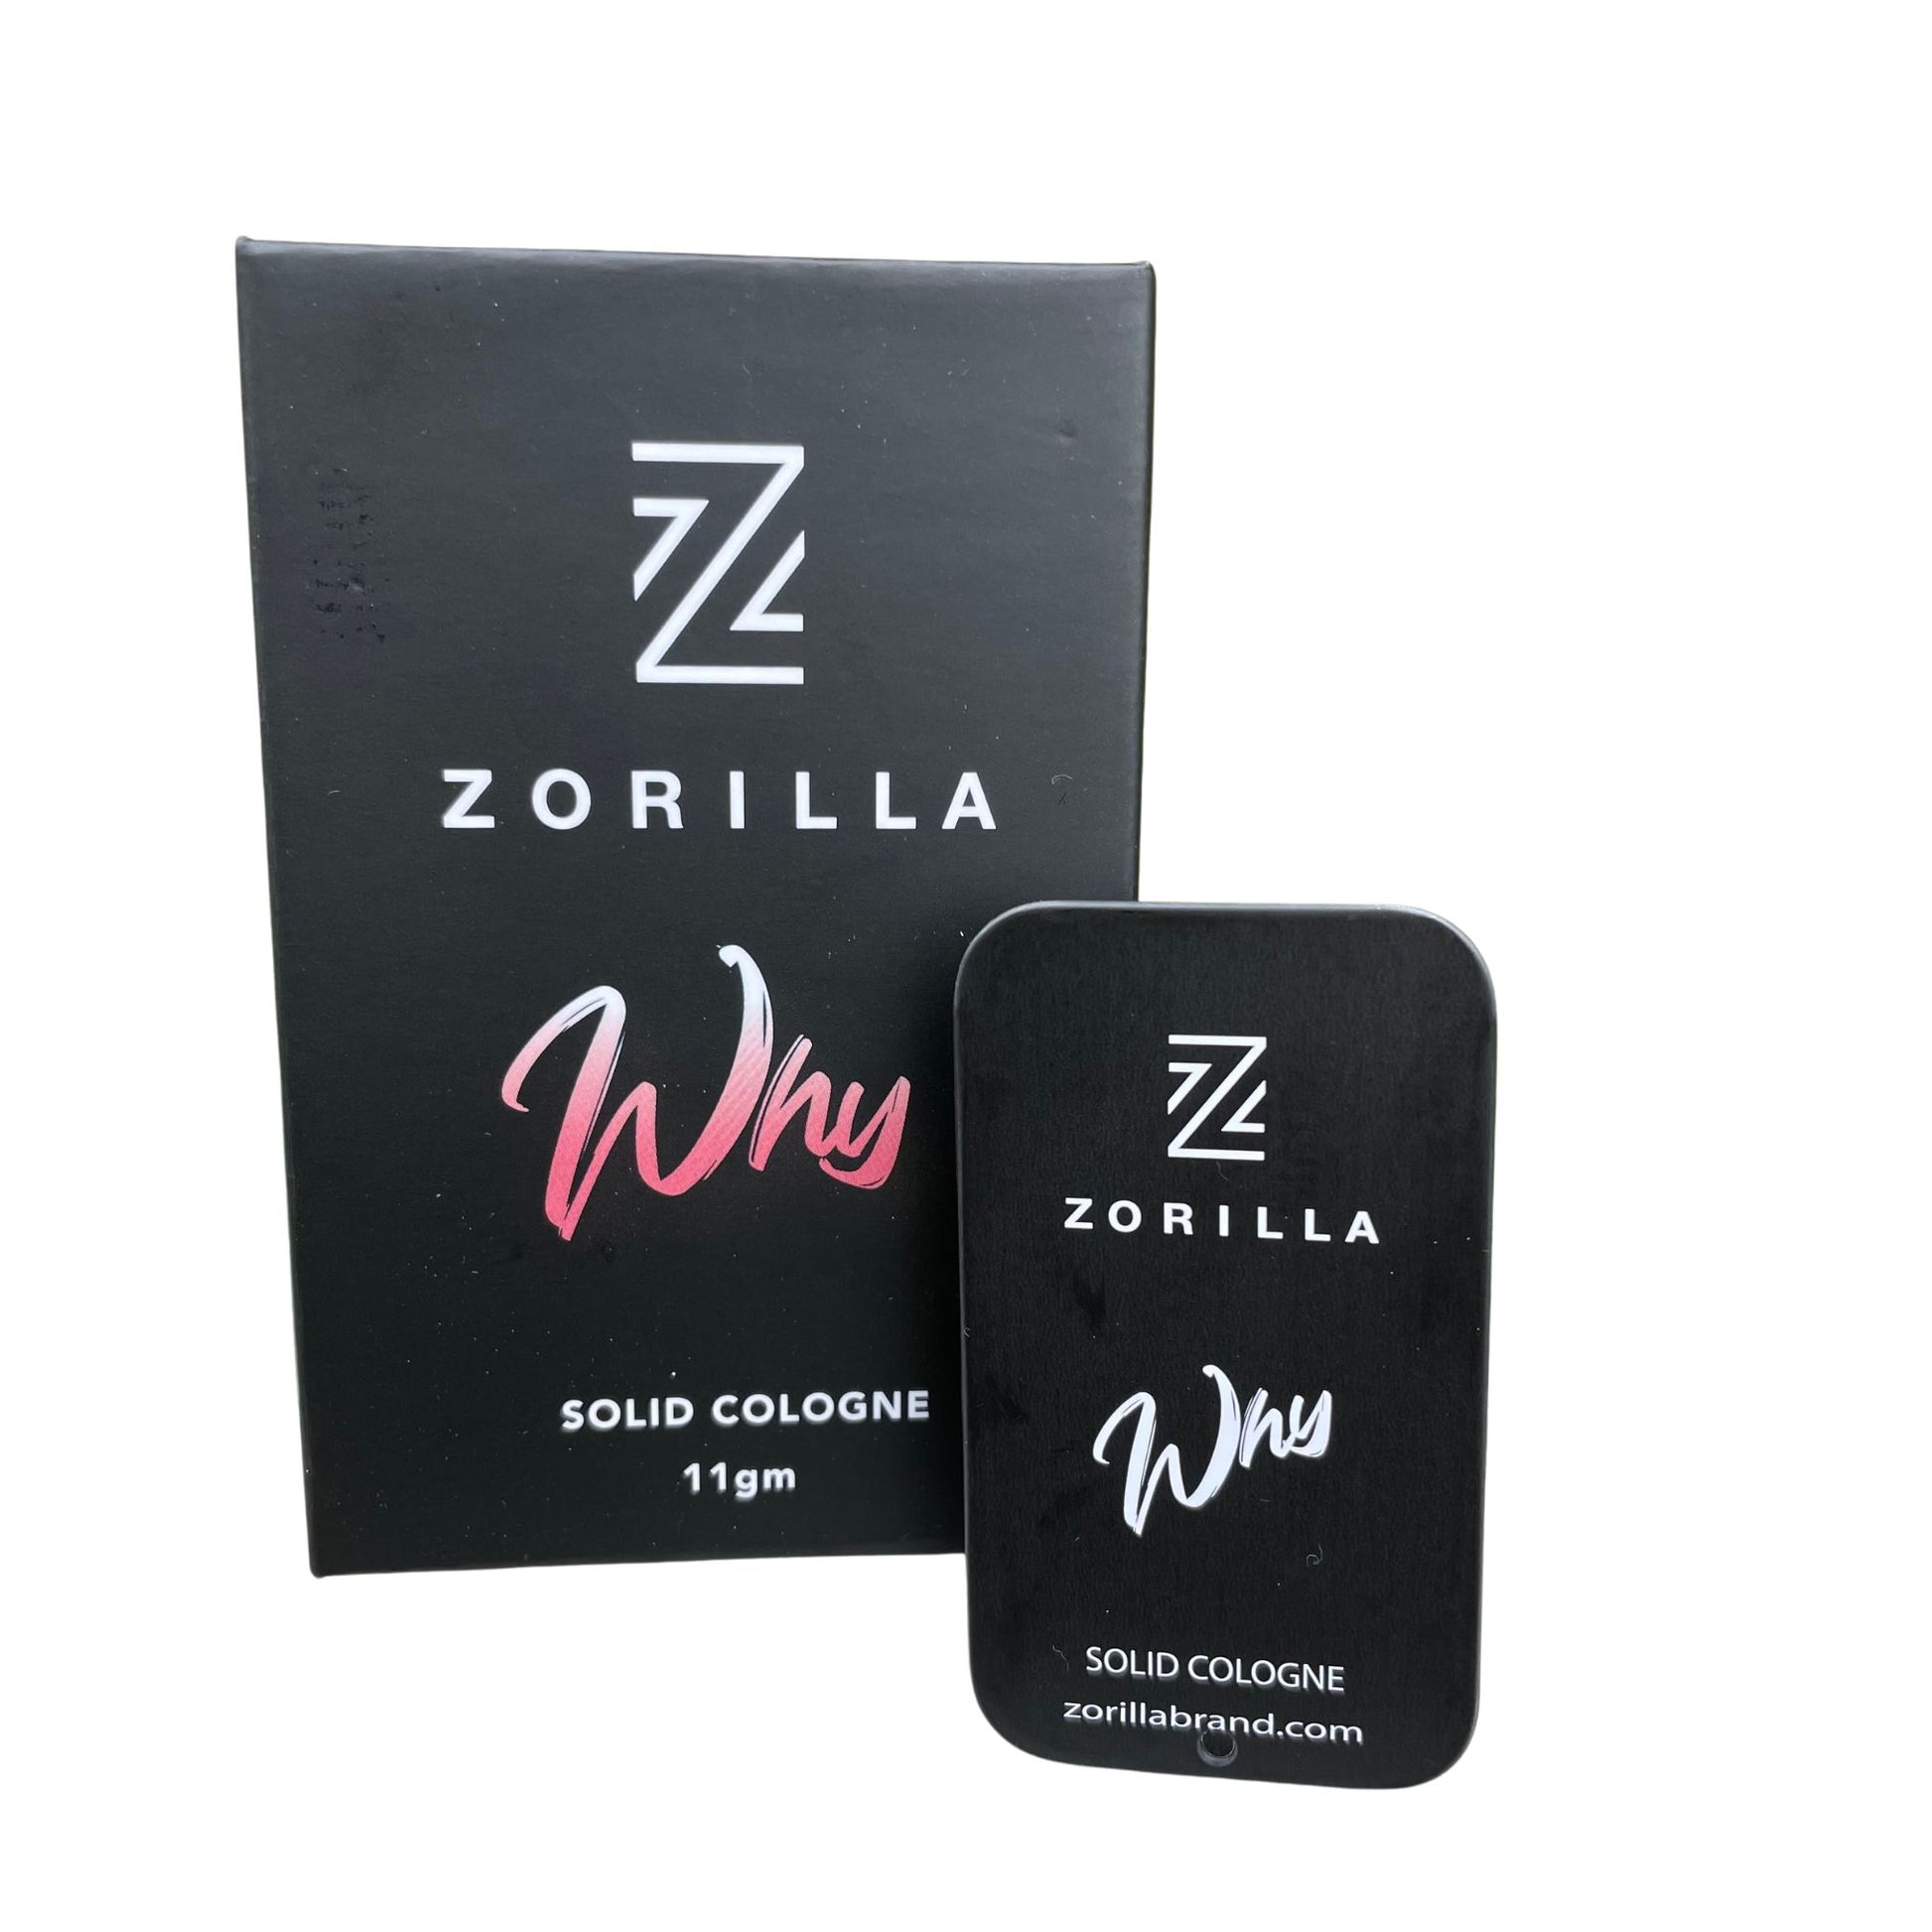 Zorilla men's solid cologne. Fragrance - Why